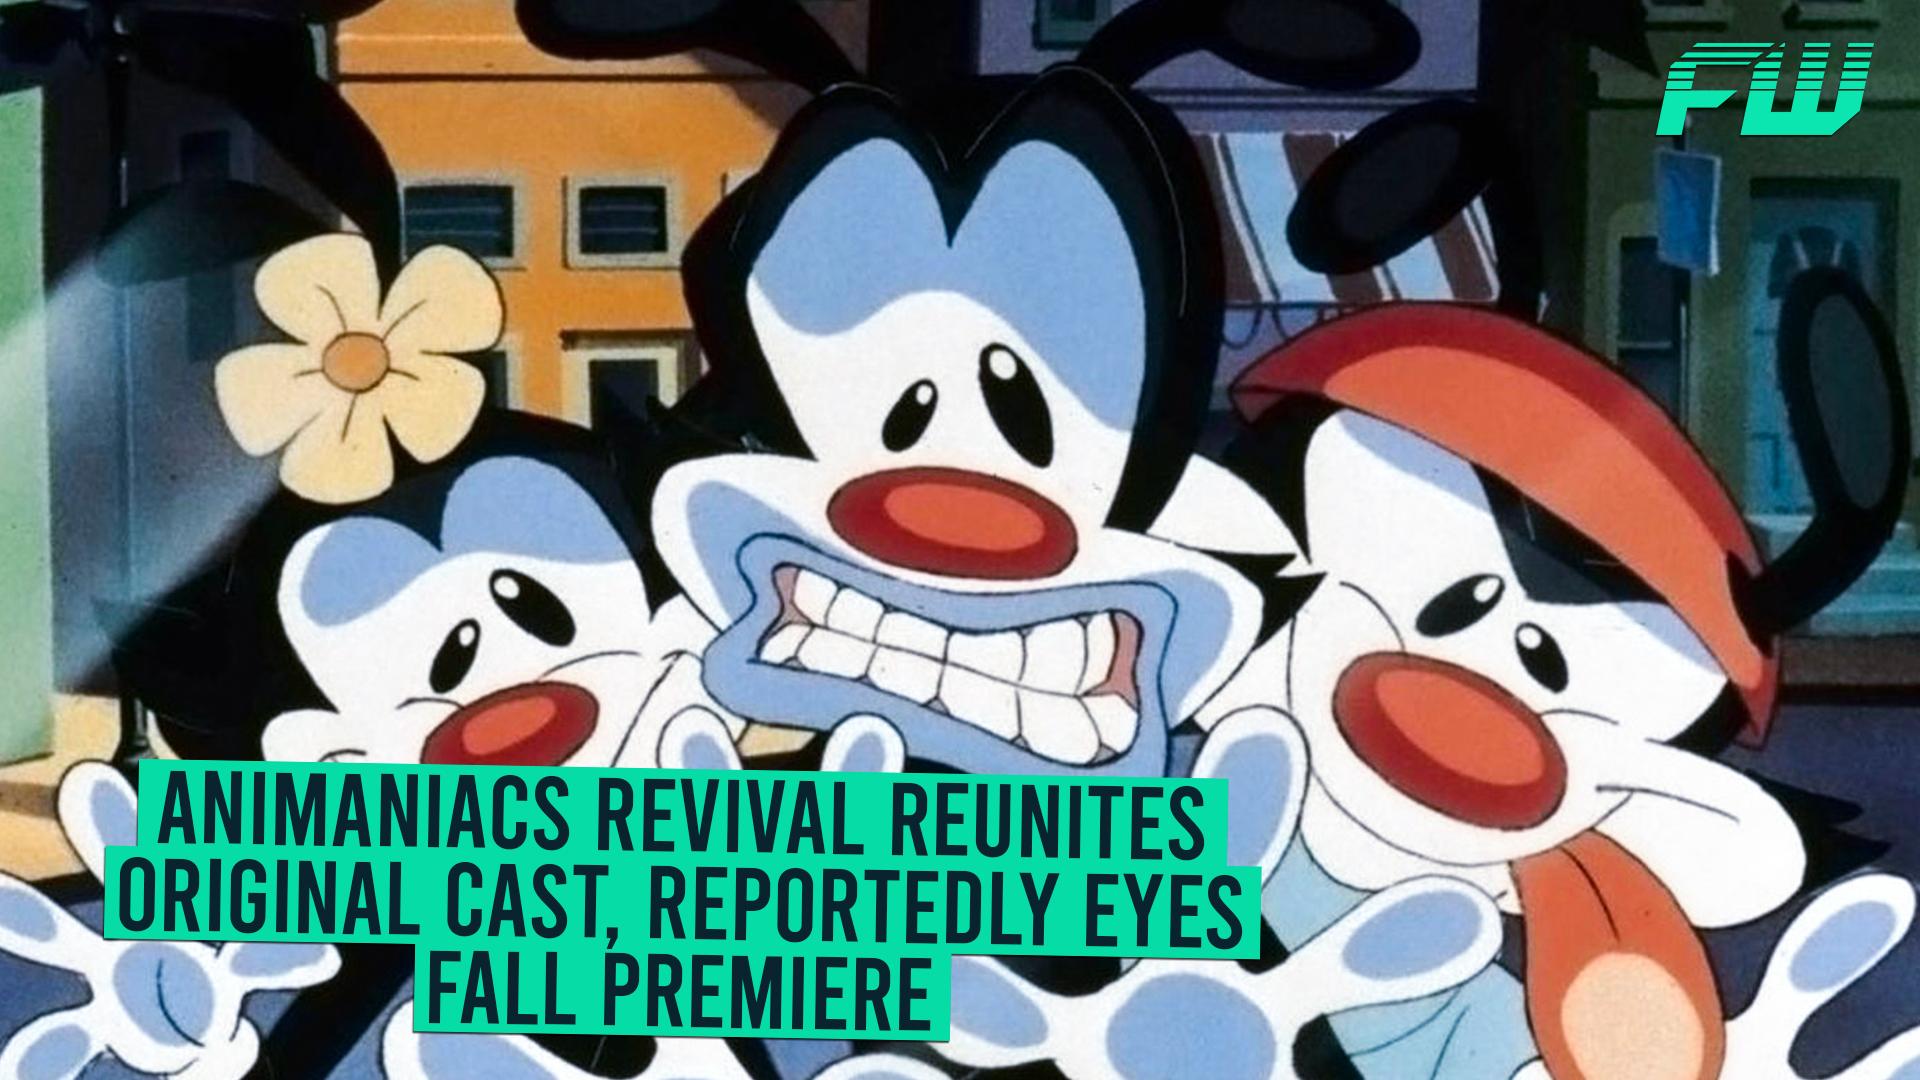 Animaniacs Revival Reunites Original Cast Reportedly Eyes Fall Premiere